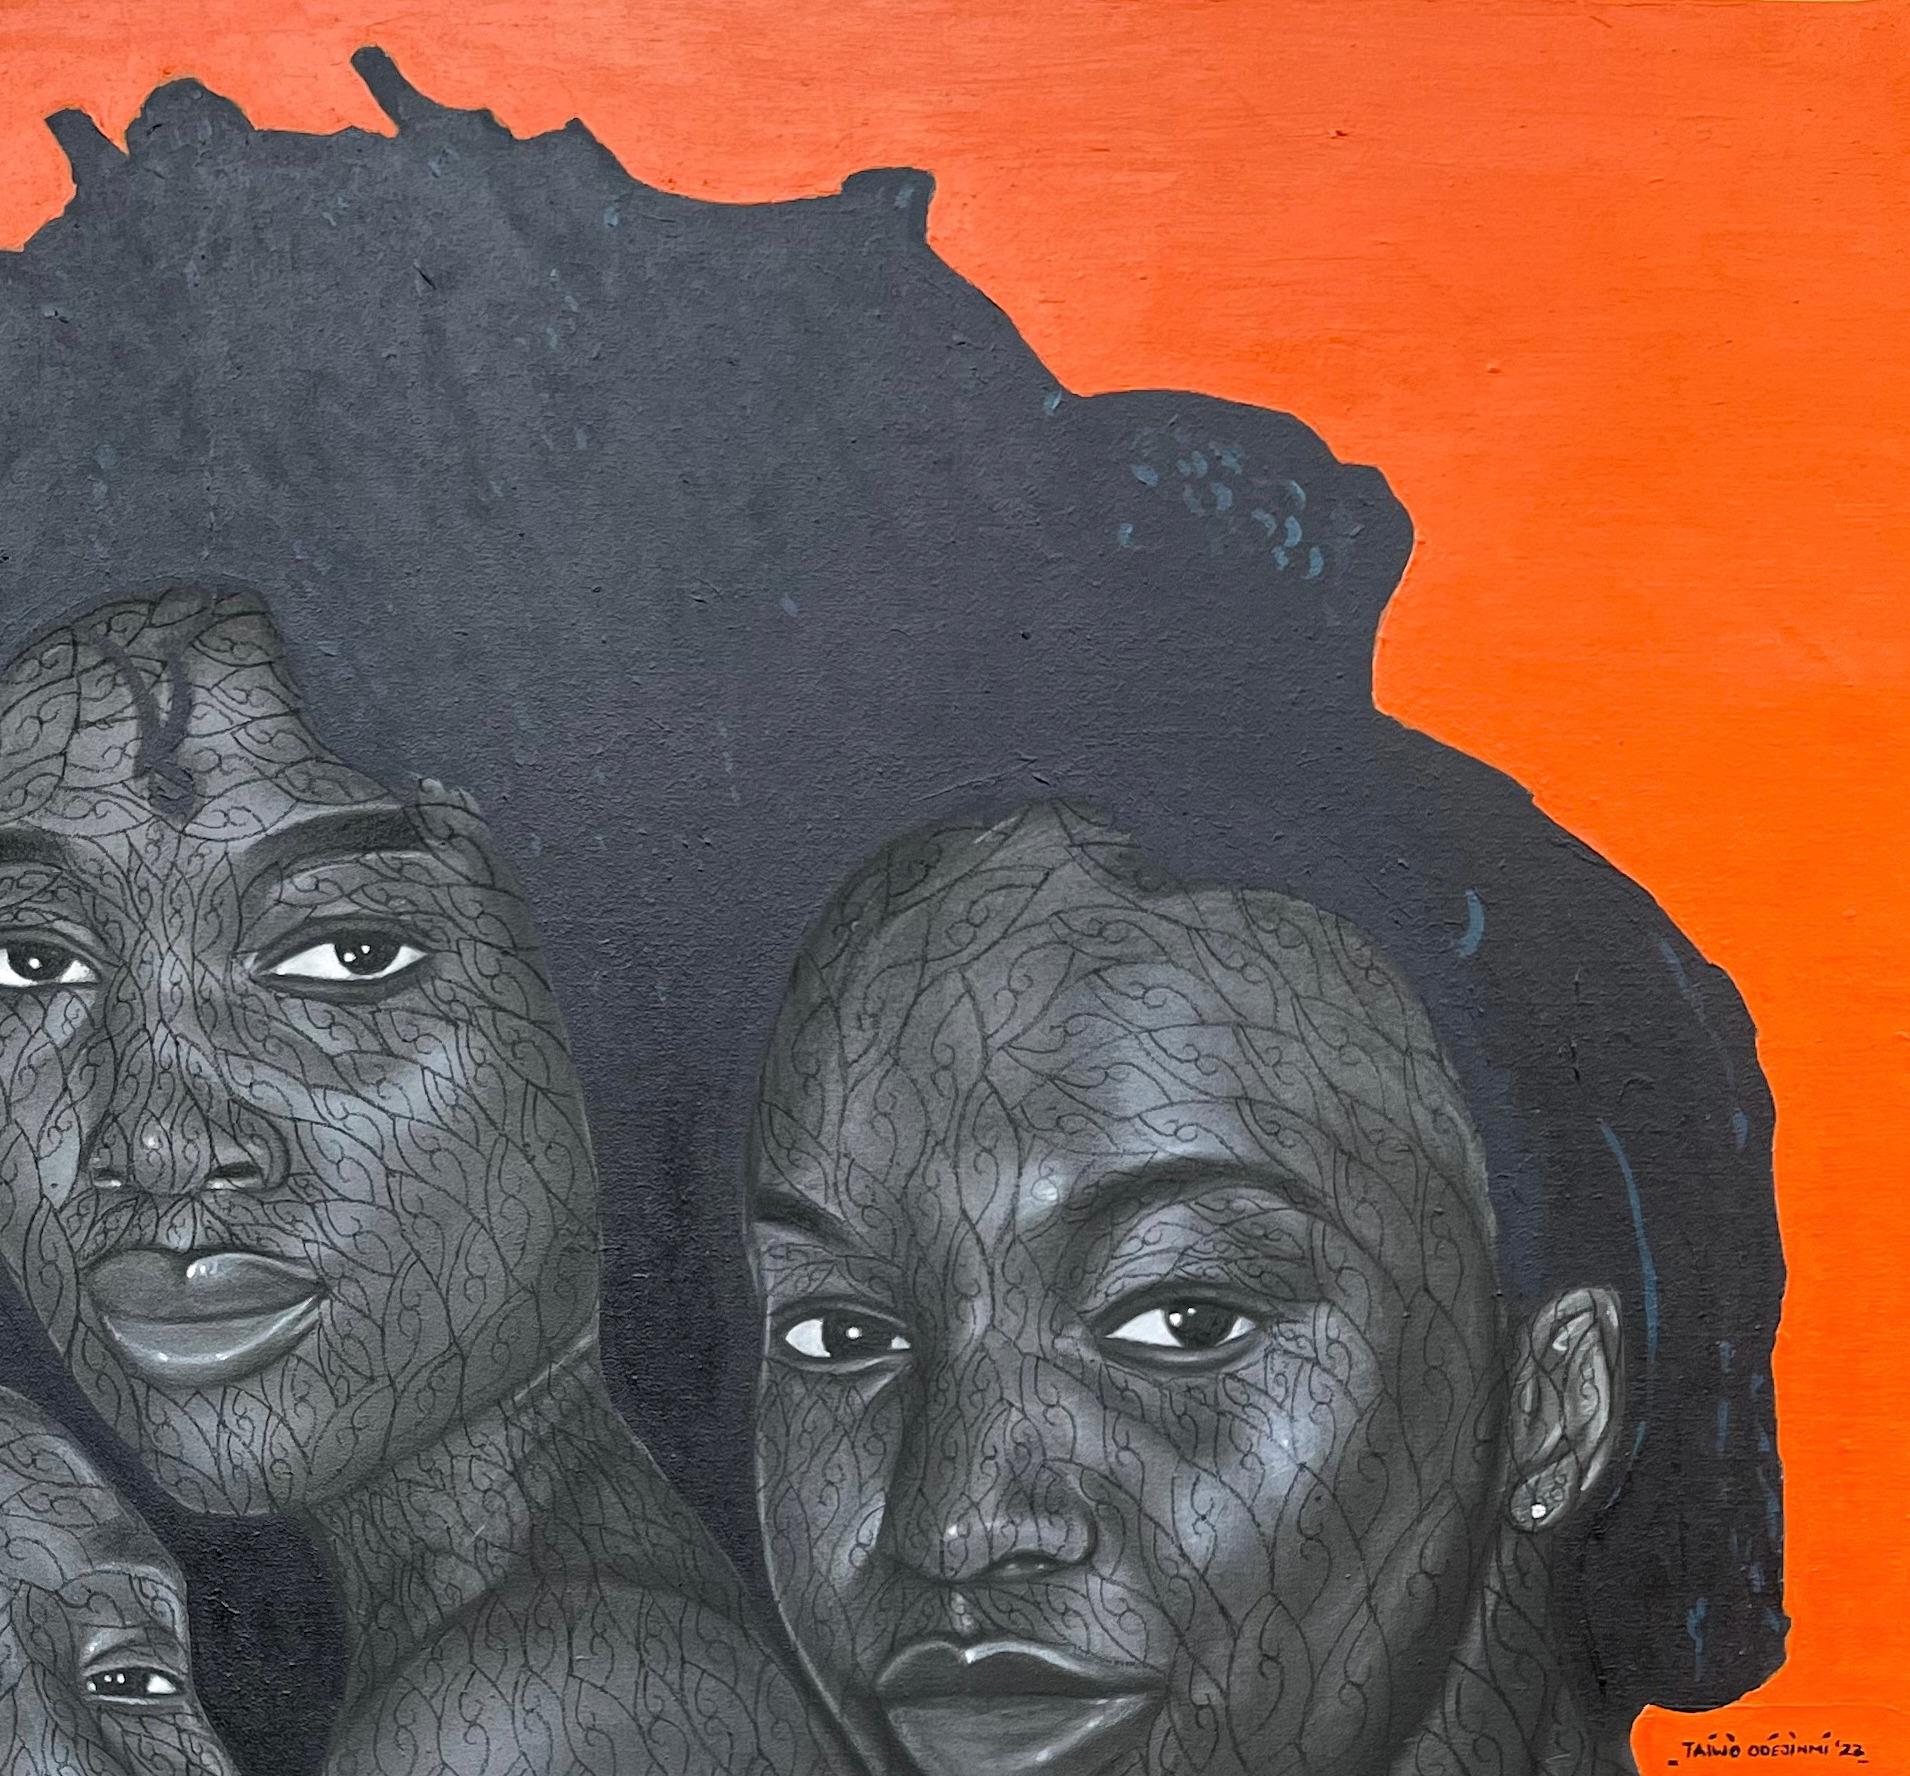 Sisterhood (The Love We Share) 3 - Conceptual Painting by Taiwo Odejinmi